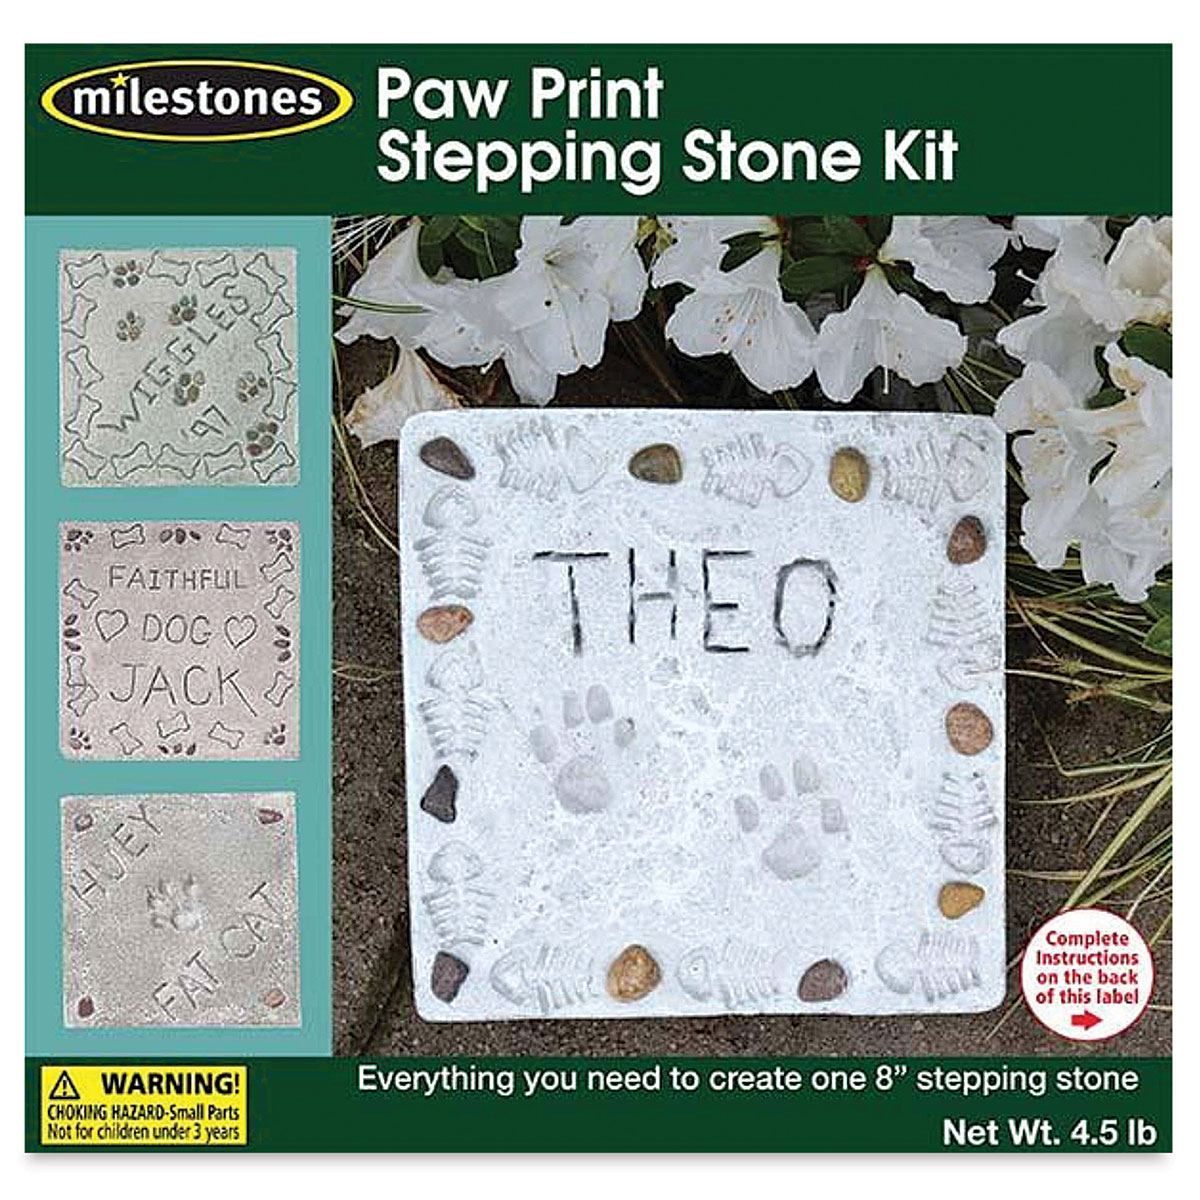 Milestones Kids' Stepping Stone Kits